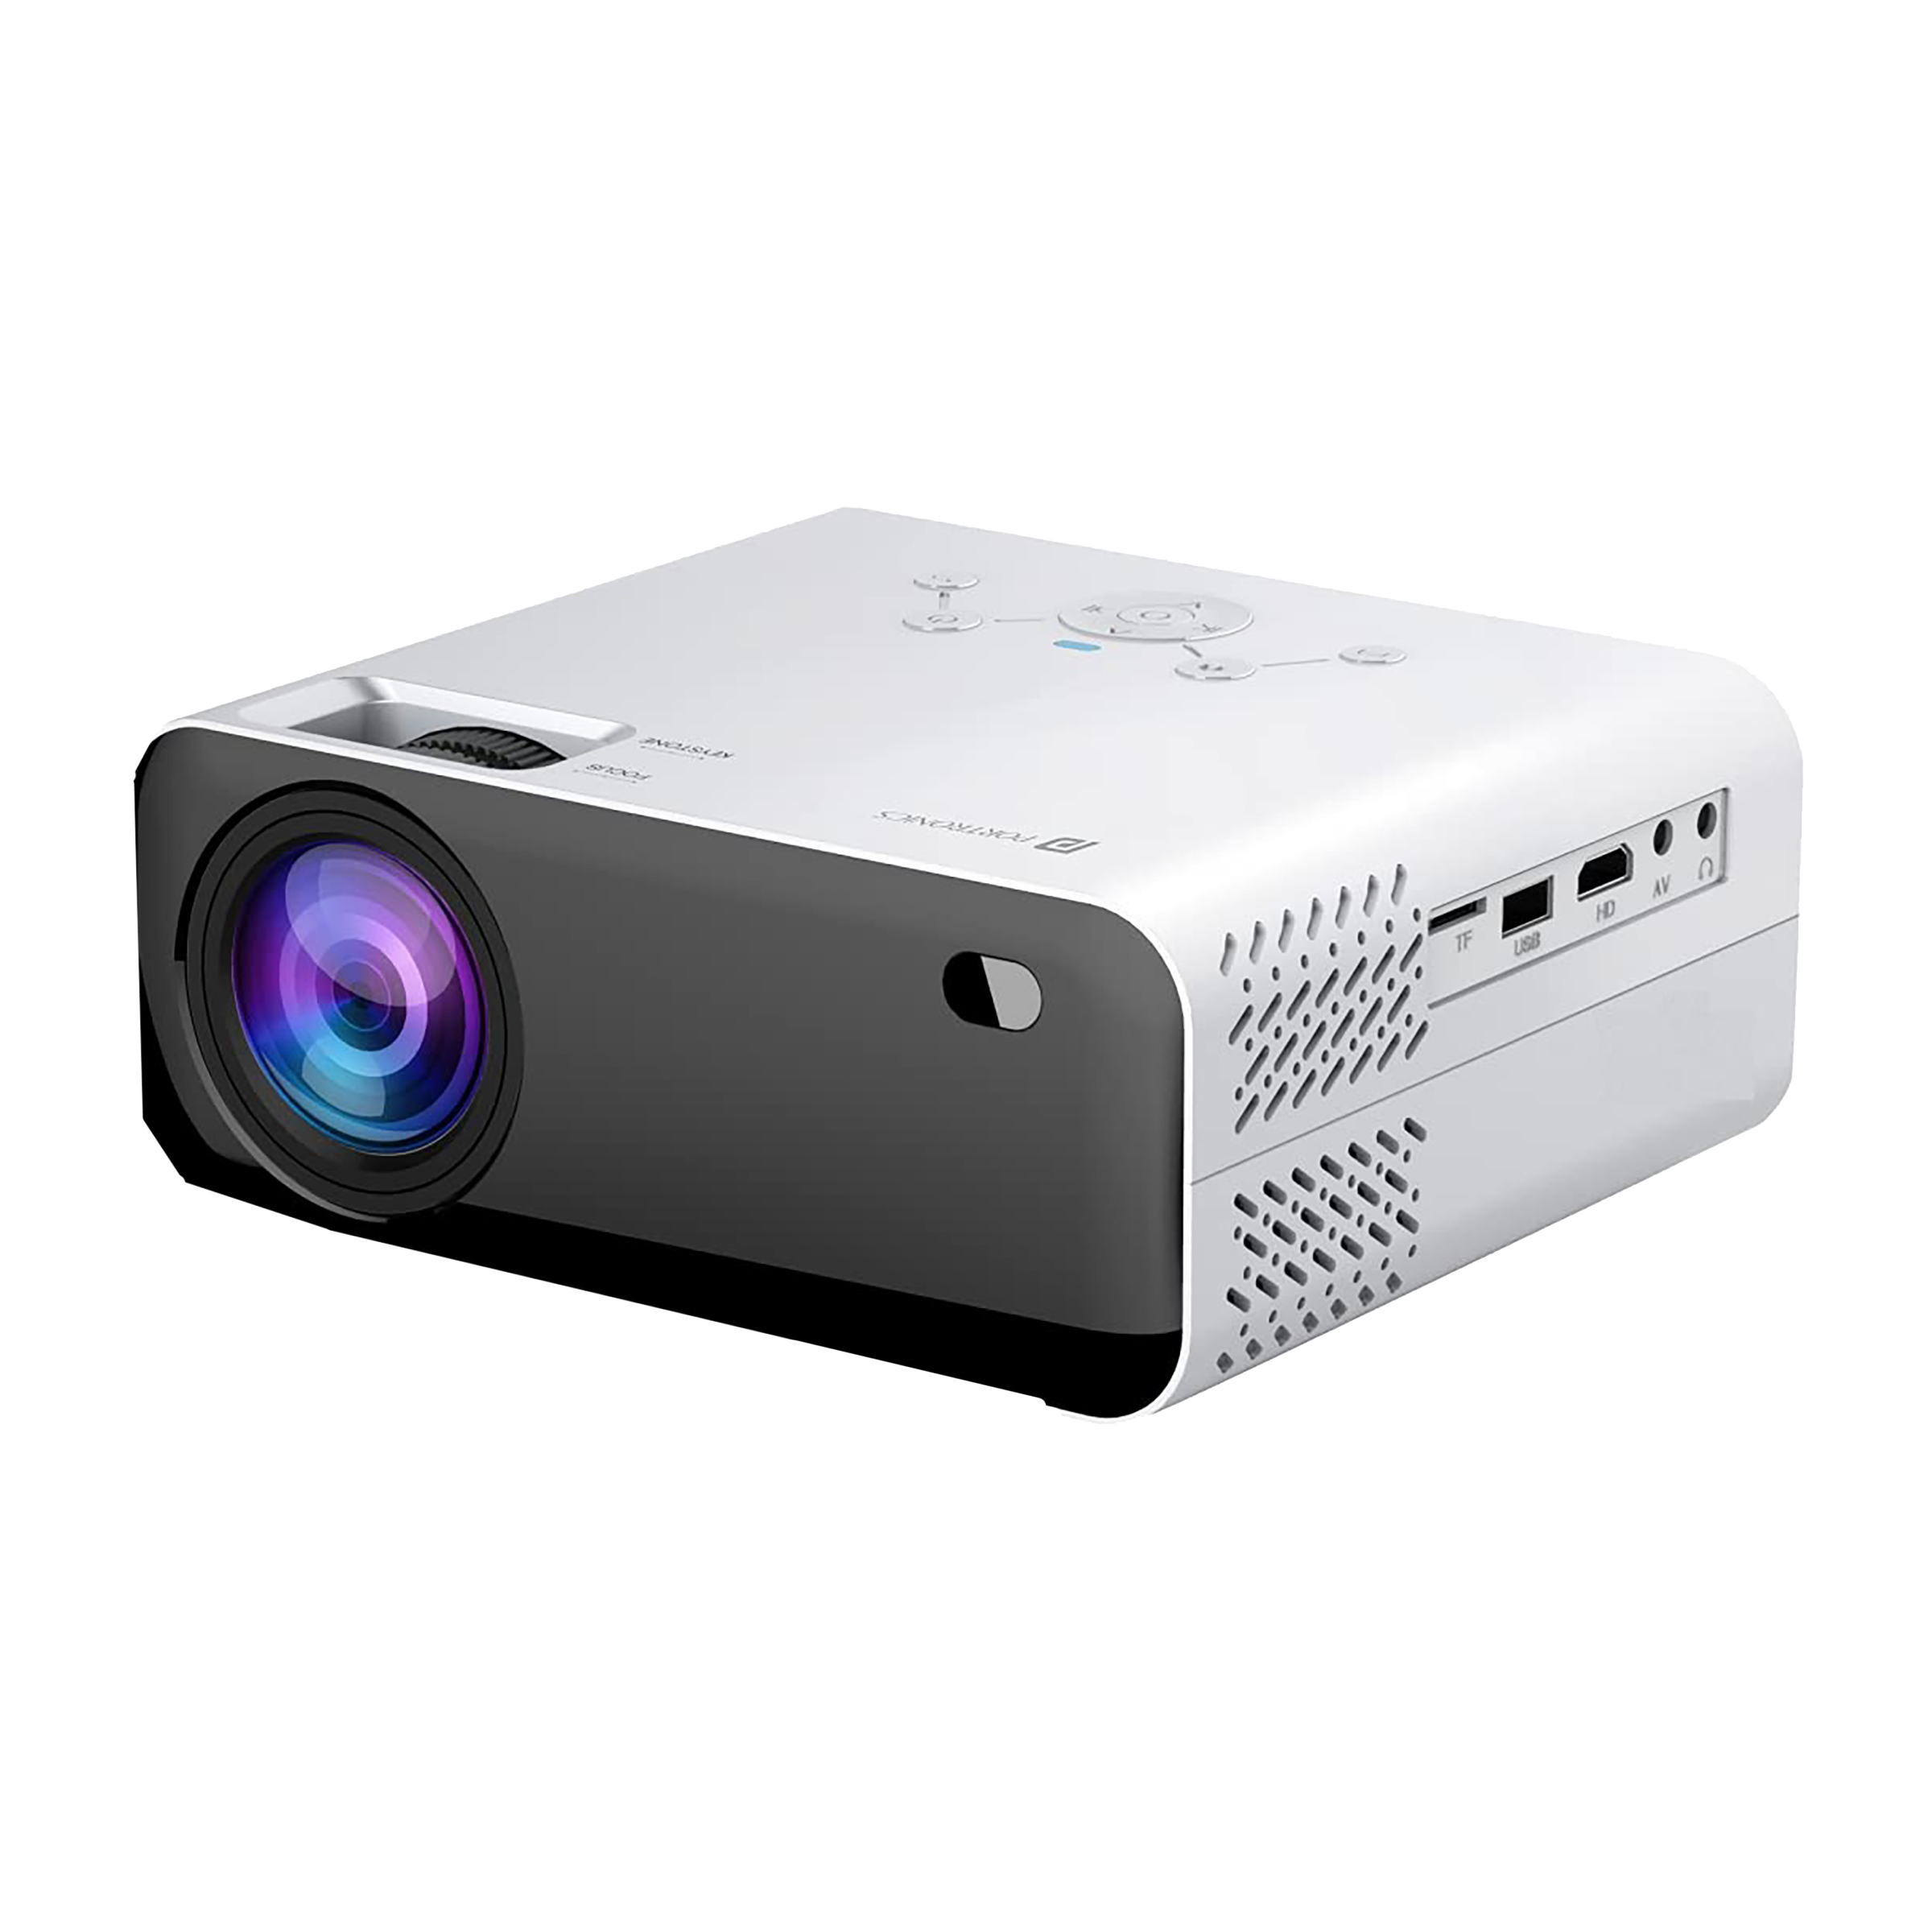 Portronics Beem 200 Plus Multimedia LED Full HD Projector (200 Lumens, Wi-Fi + HDMI + VGA + USB + SD, Android/iOS Mirroring, POR-283, Black/White)_1